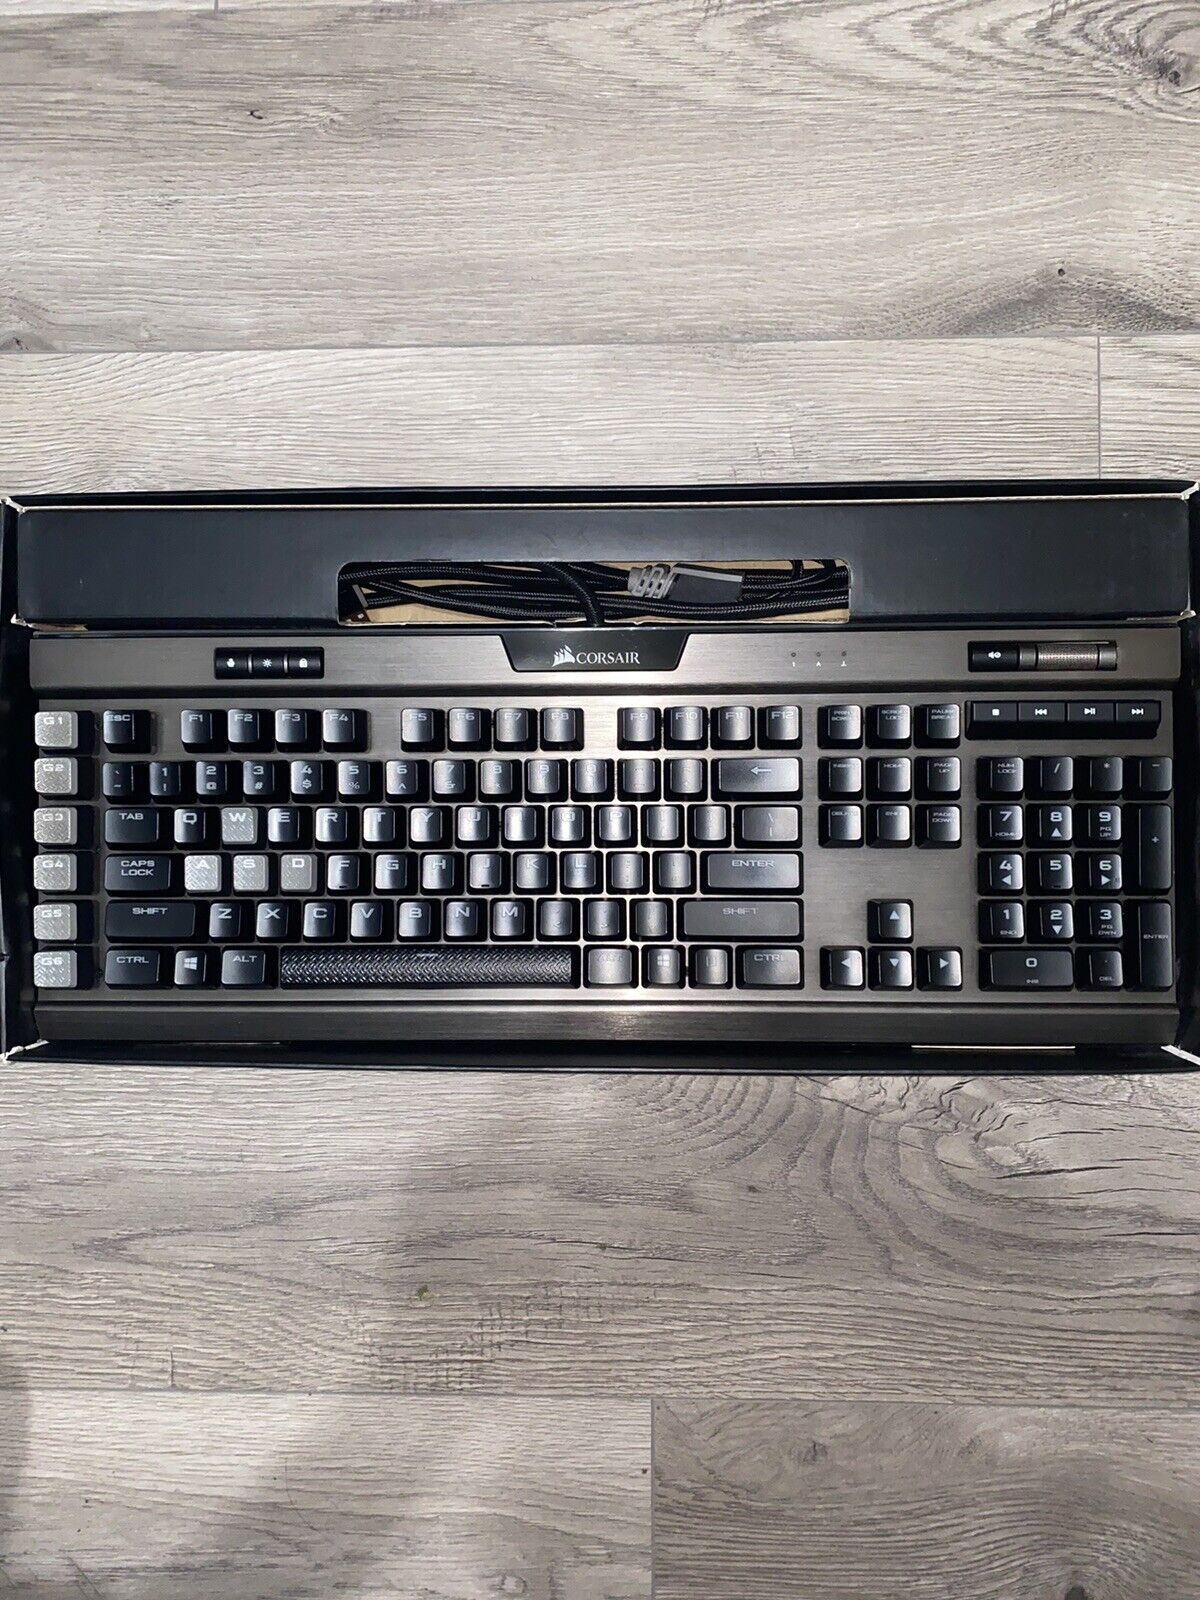 Corsair K95 RGB PLATINUM Cherry MX Speed CH-9127014-NA Wired LED Gaming Keyboard